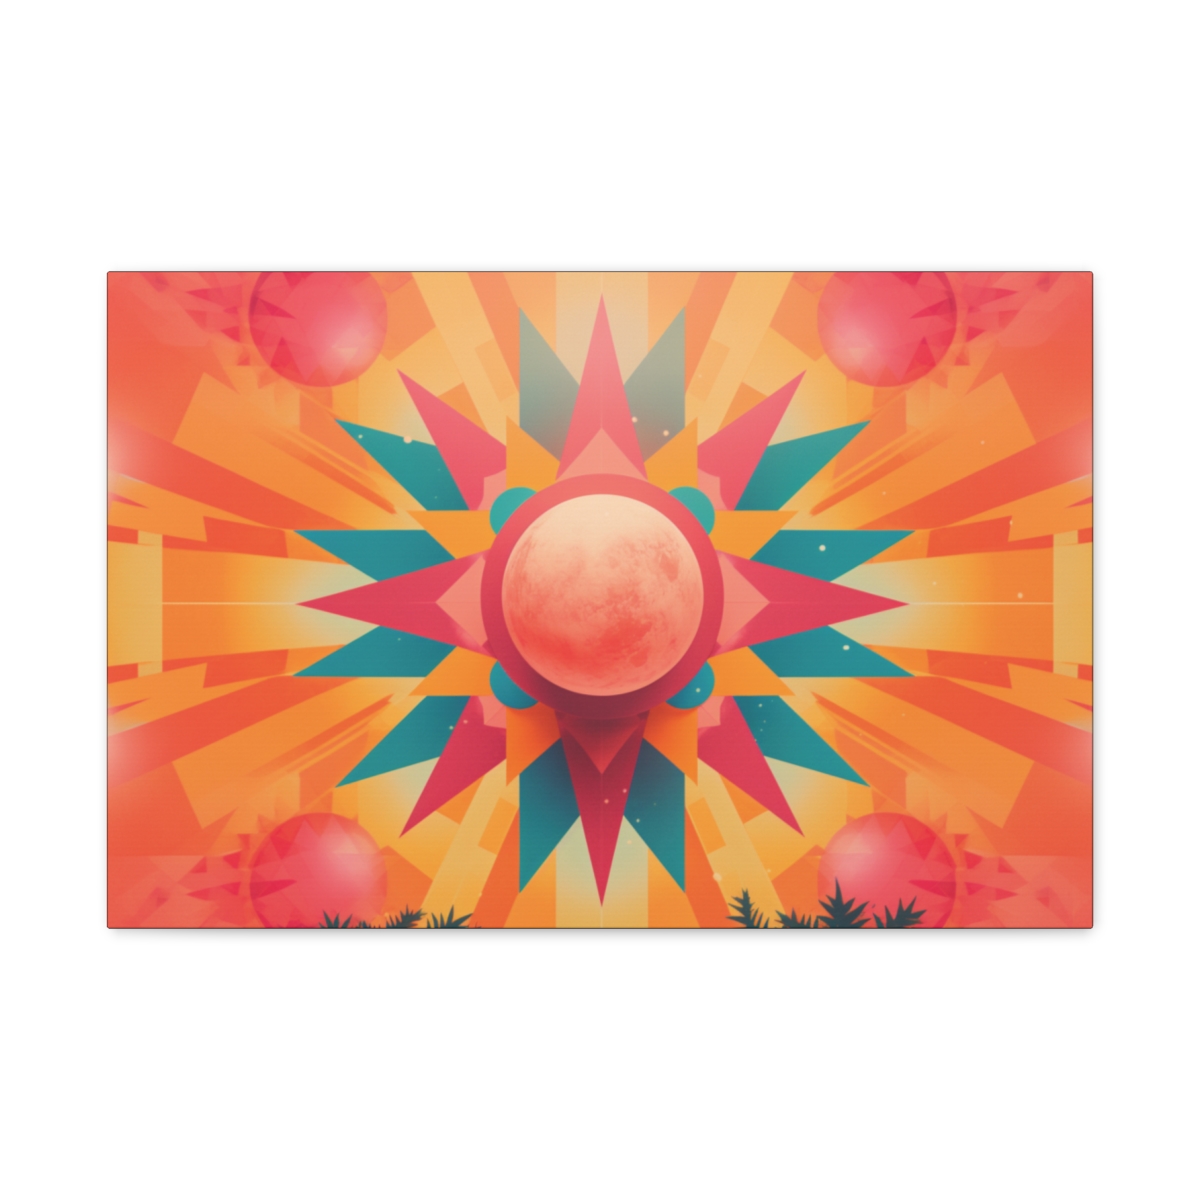 Trippy Sun Art Canvas Print: Meadows Of Peace